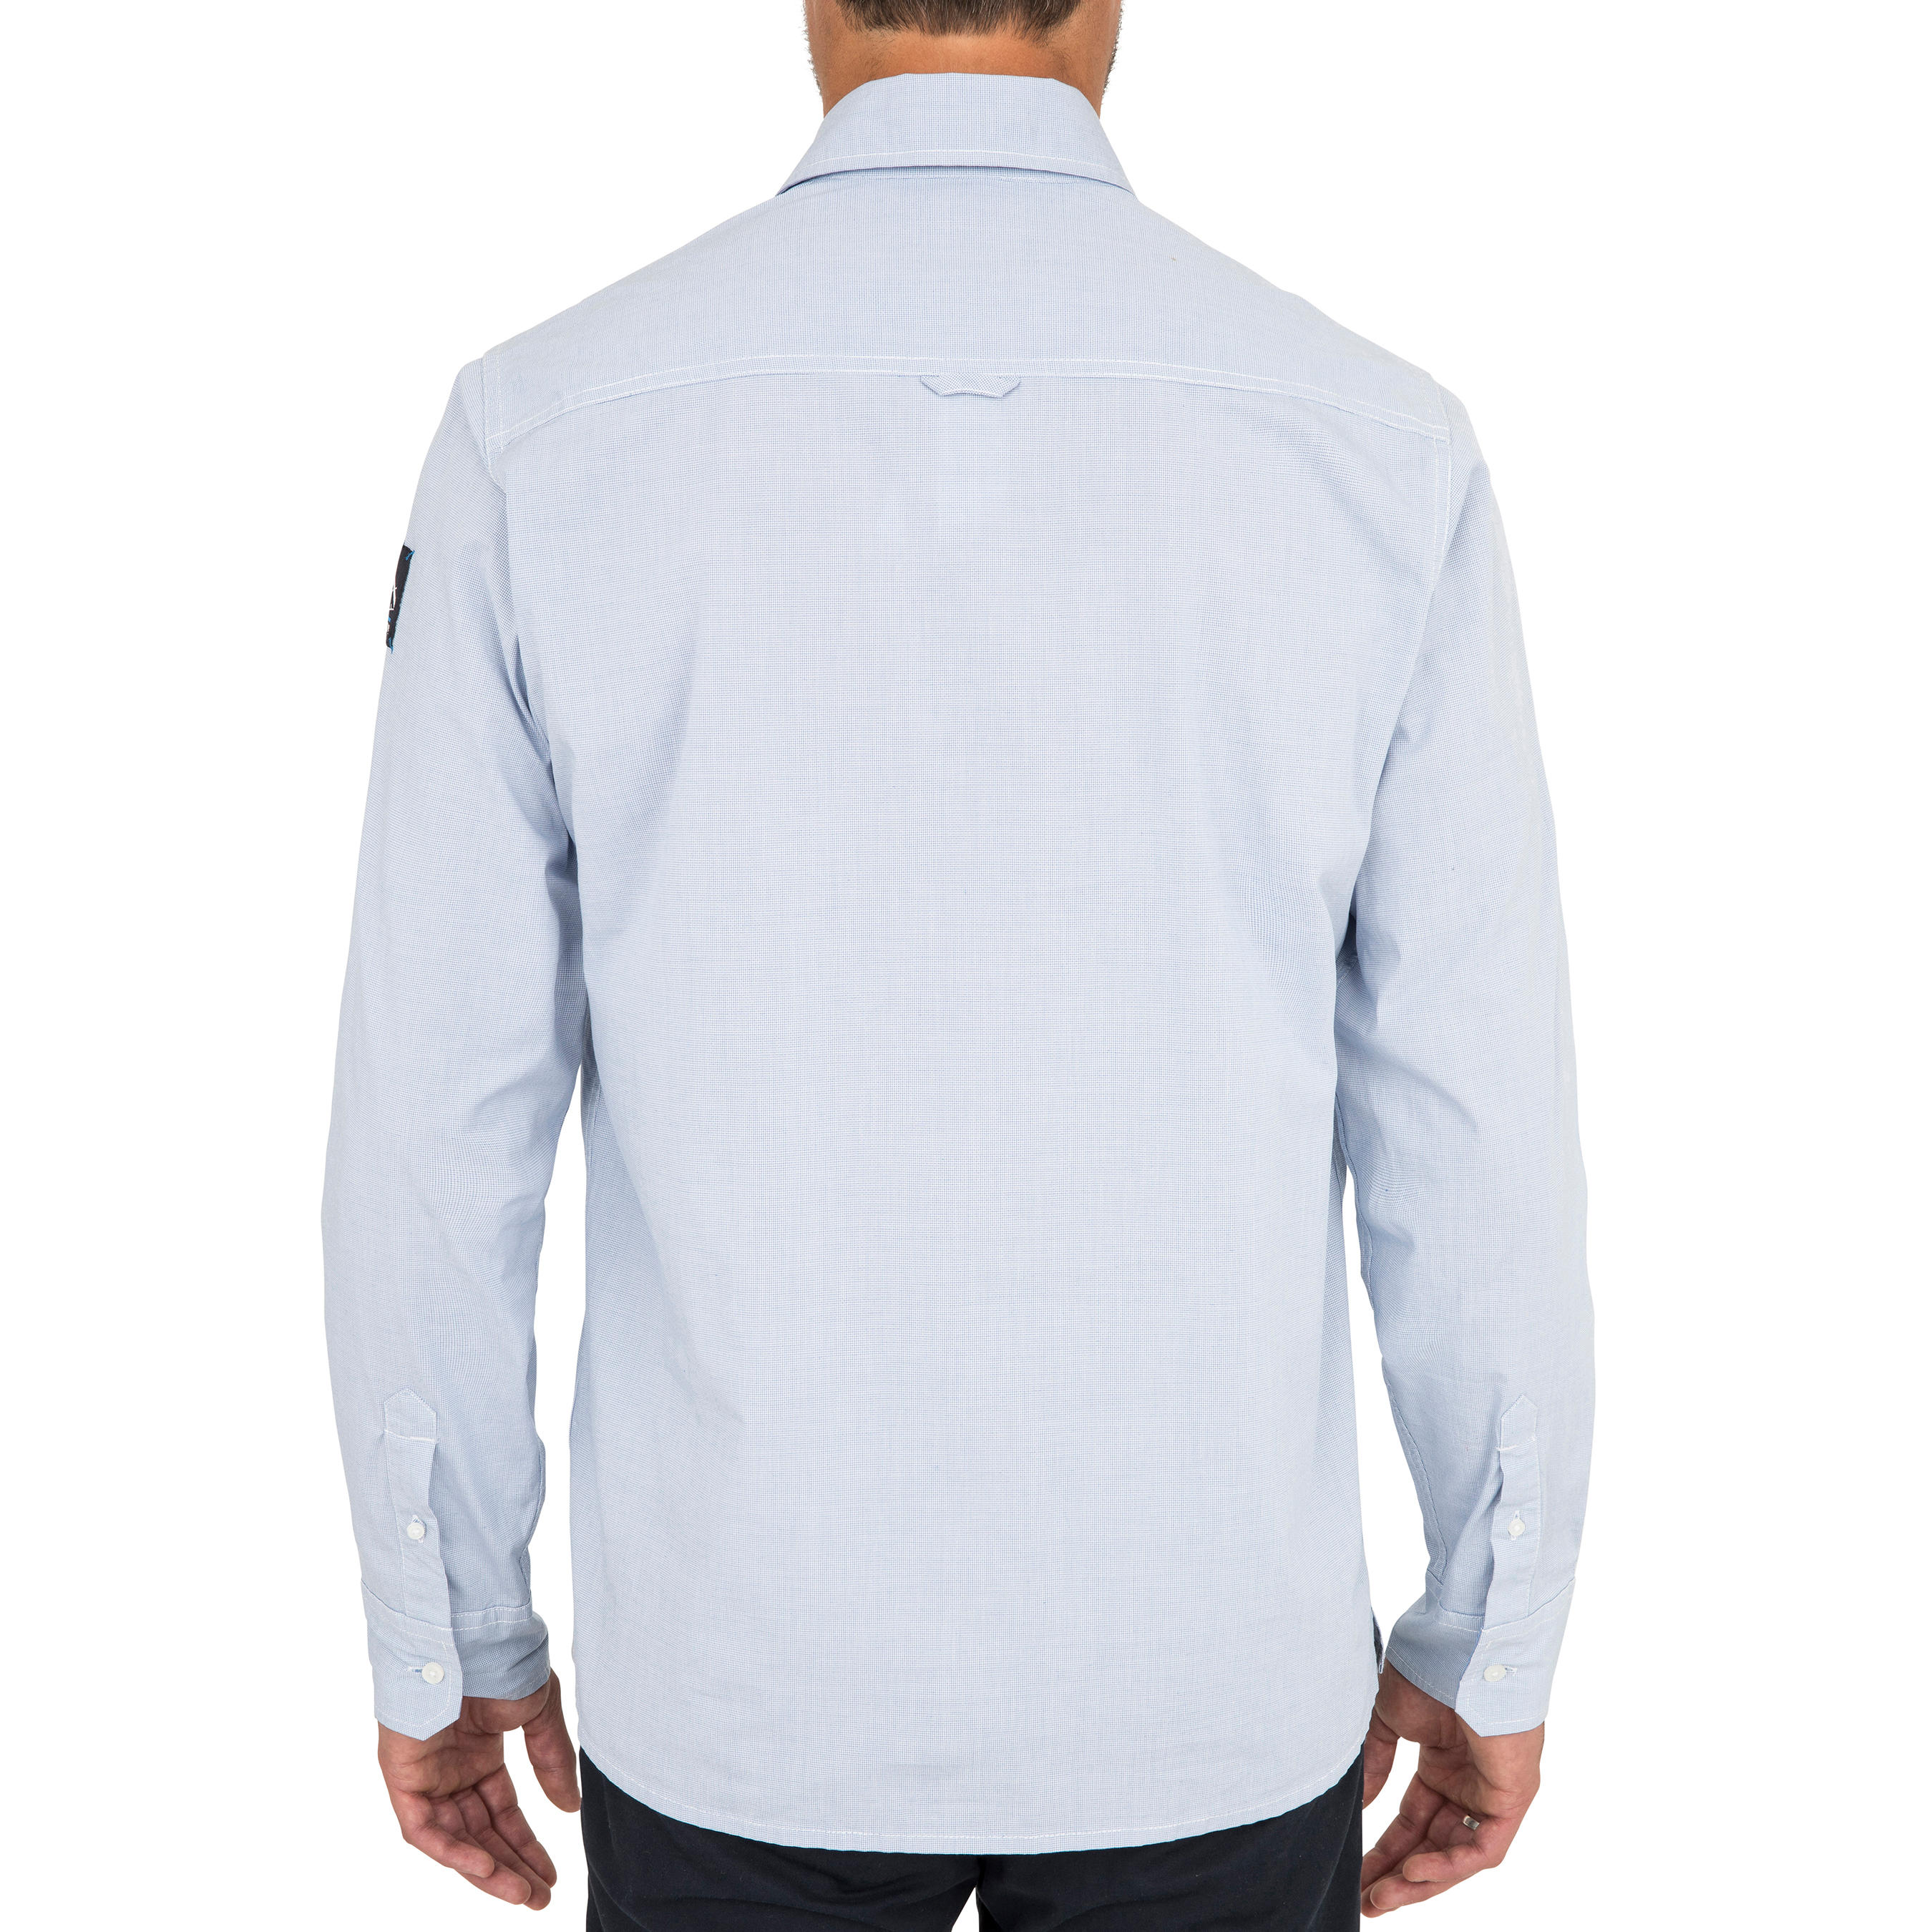 Men's sailing shirt 100 - blue 4/8